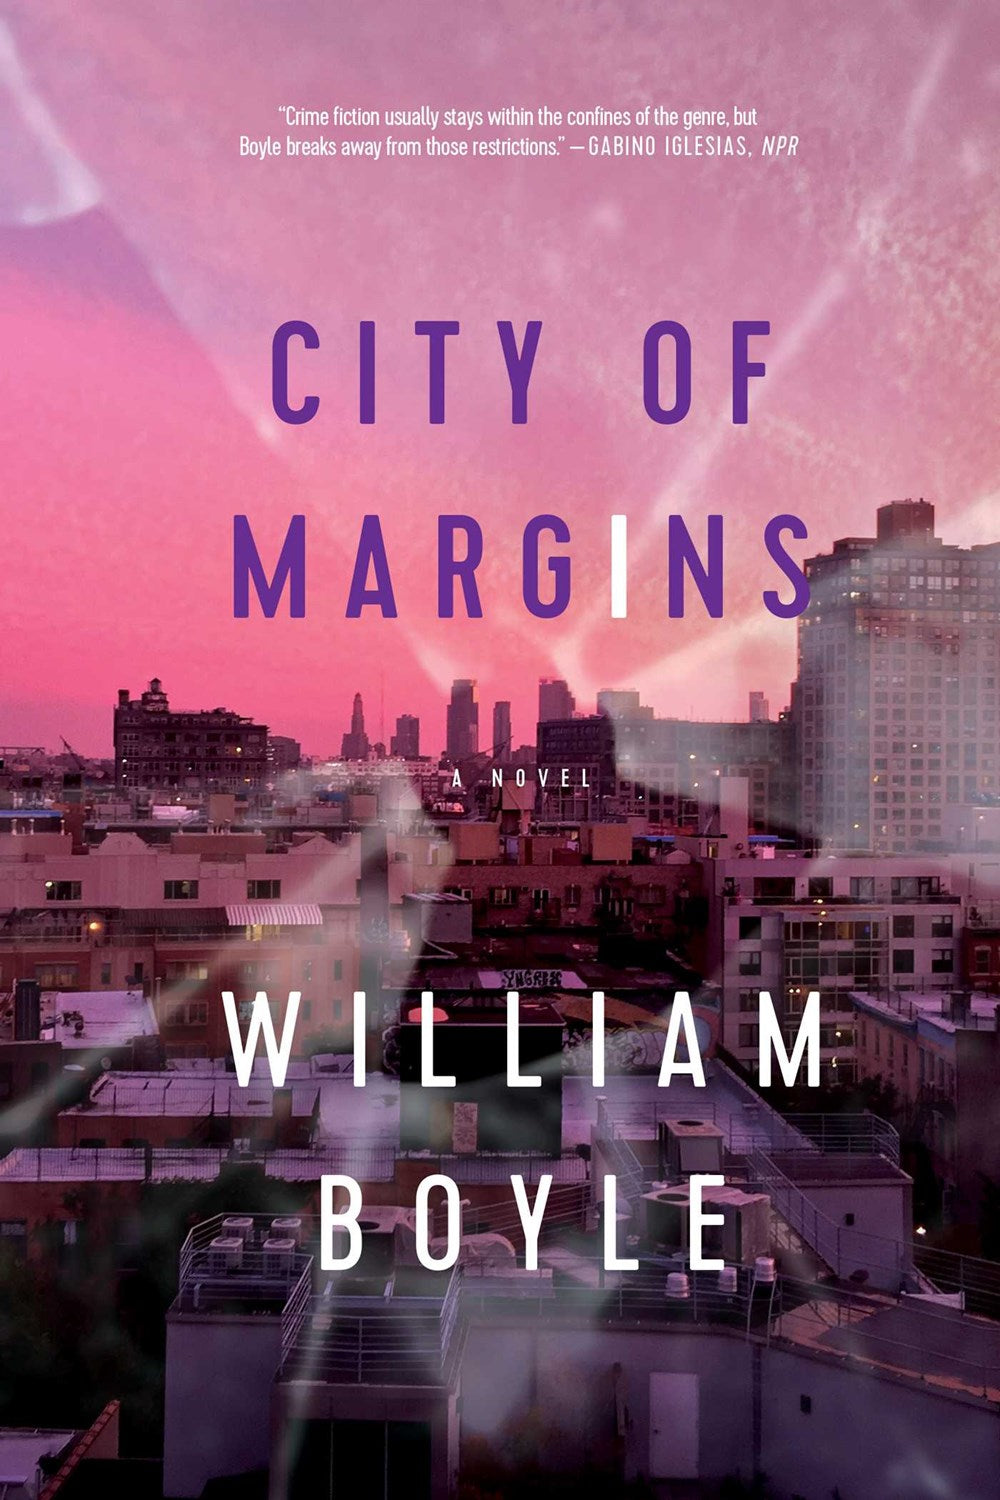 City of Margins: A Novel by William Boyle